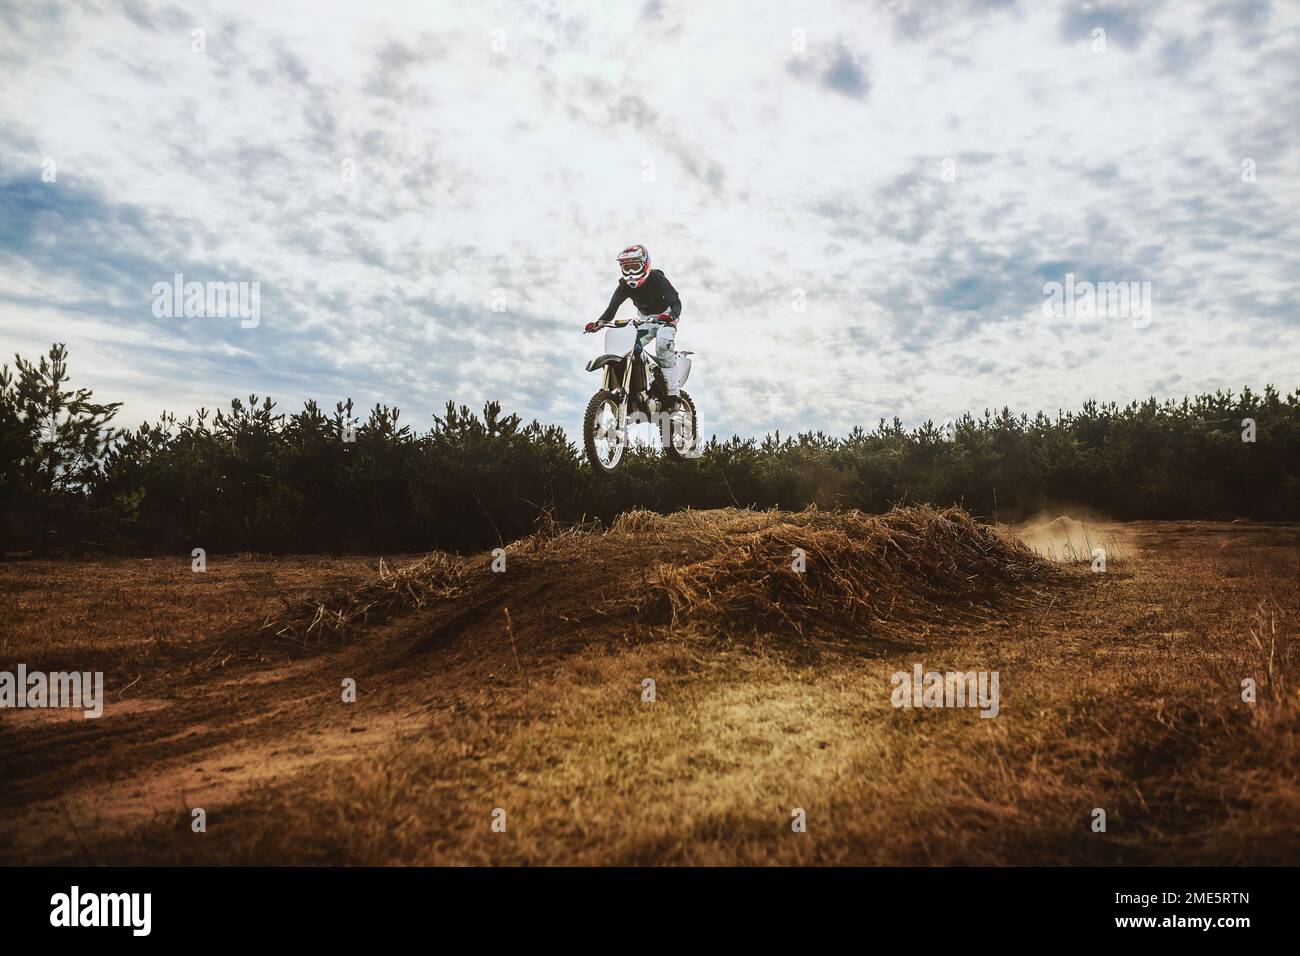 Giovane uomo in bici sterrata salta nel cielo blu Foto Stock